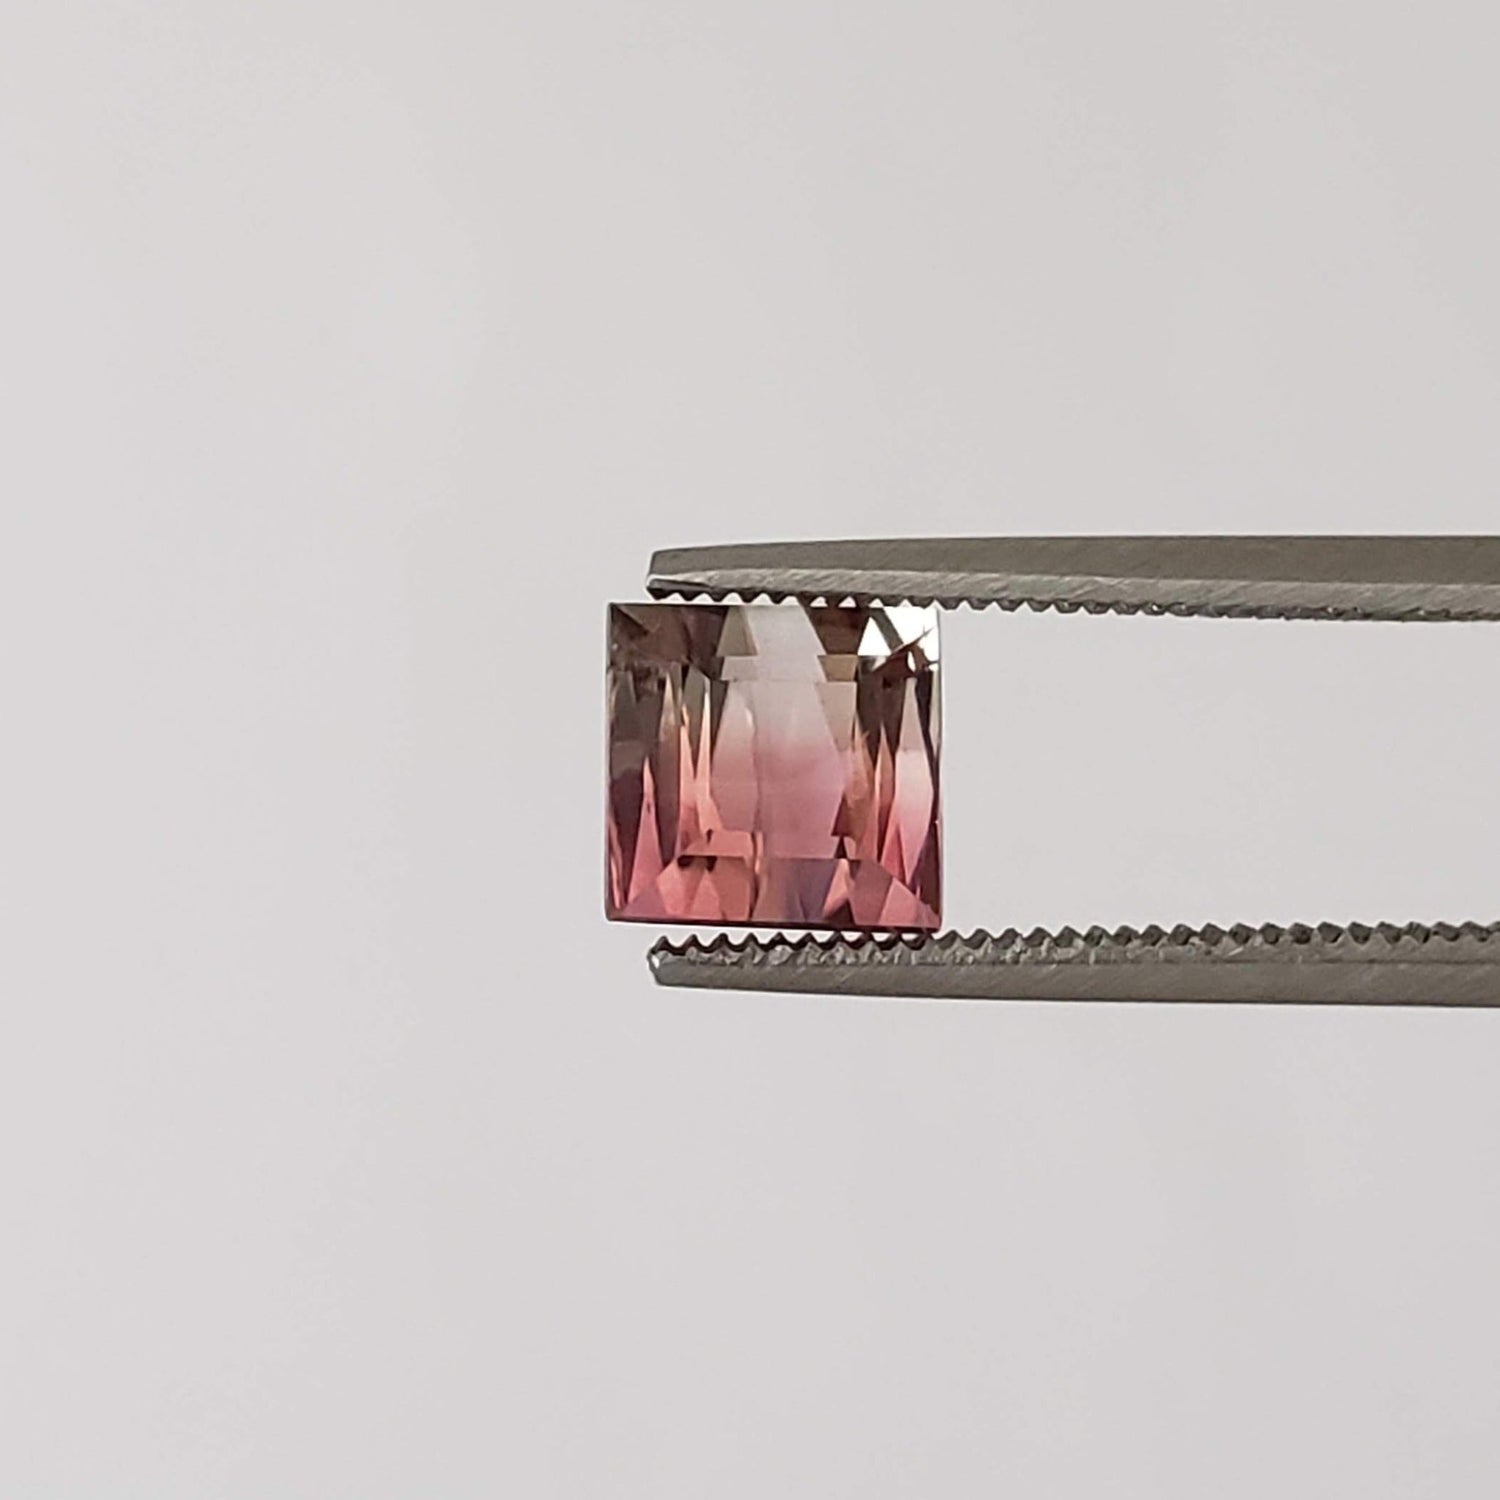 Tourmaline | Square Cut | Pink-Green Bi-color | 5.9mm 1.7ct